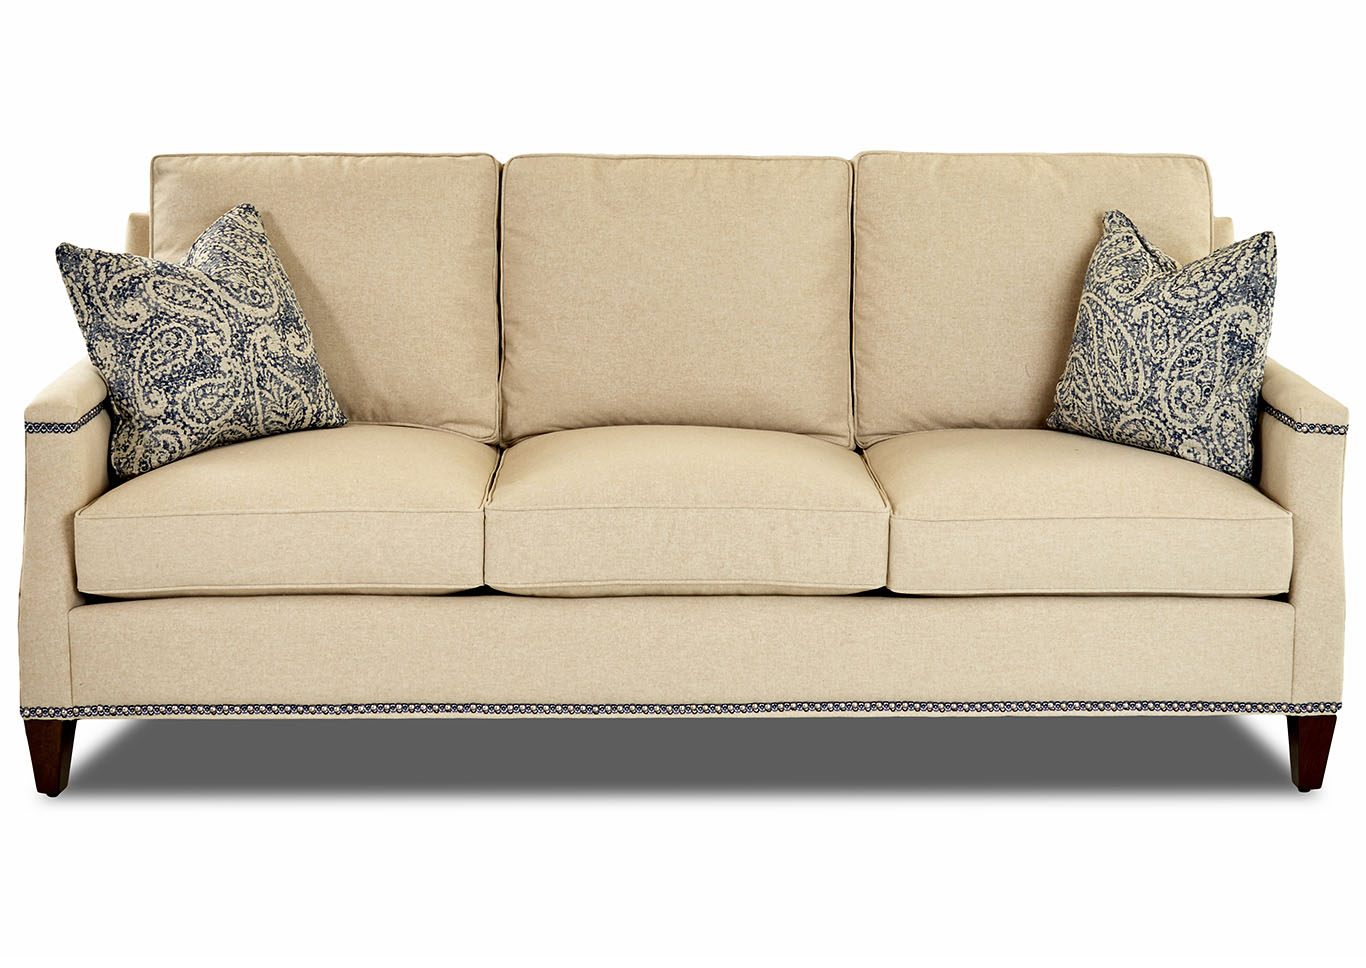 Bond Sand Stationary Fabric Sofa,Klaussner Home Furnishings